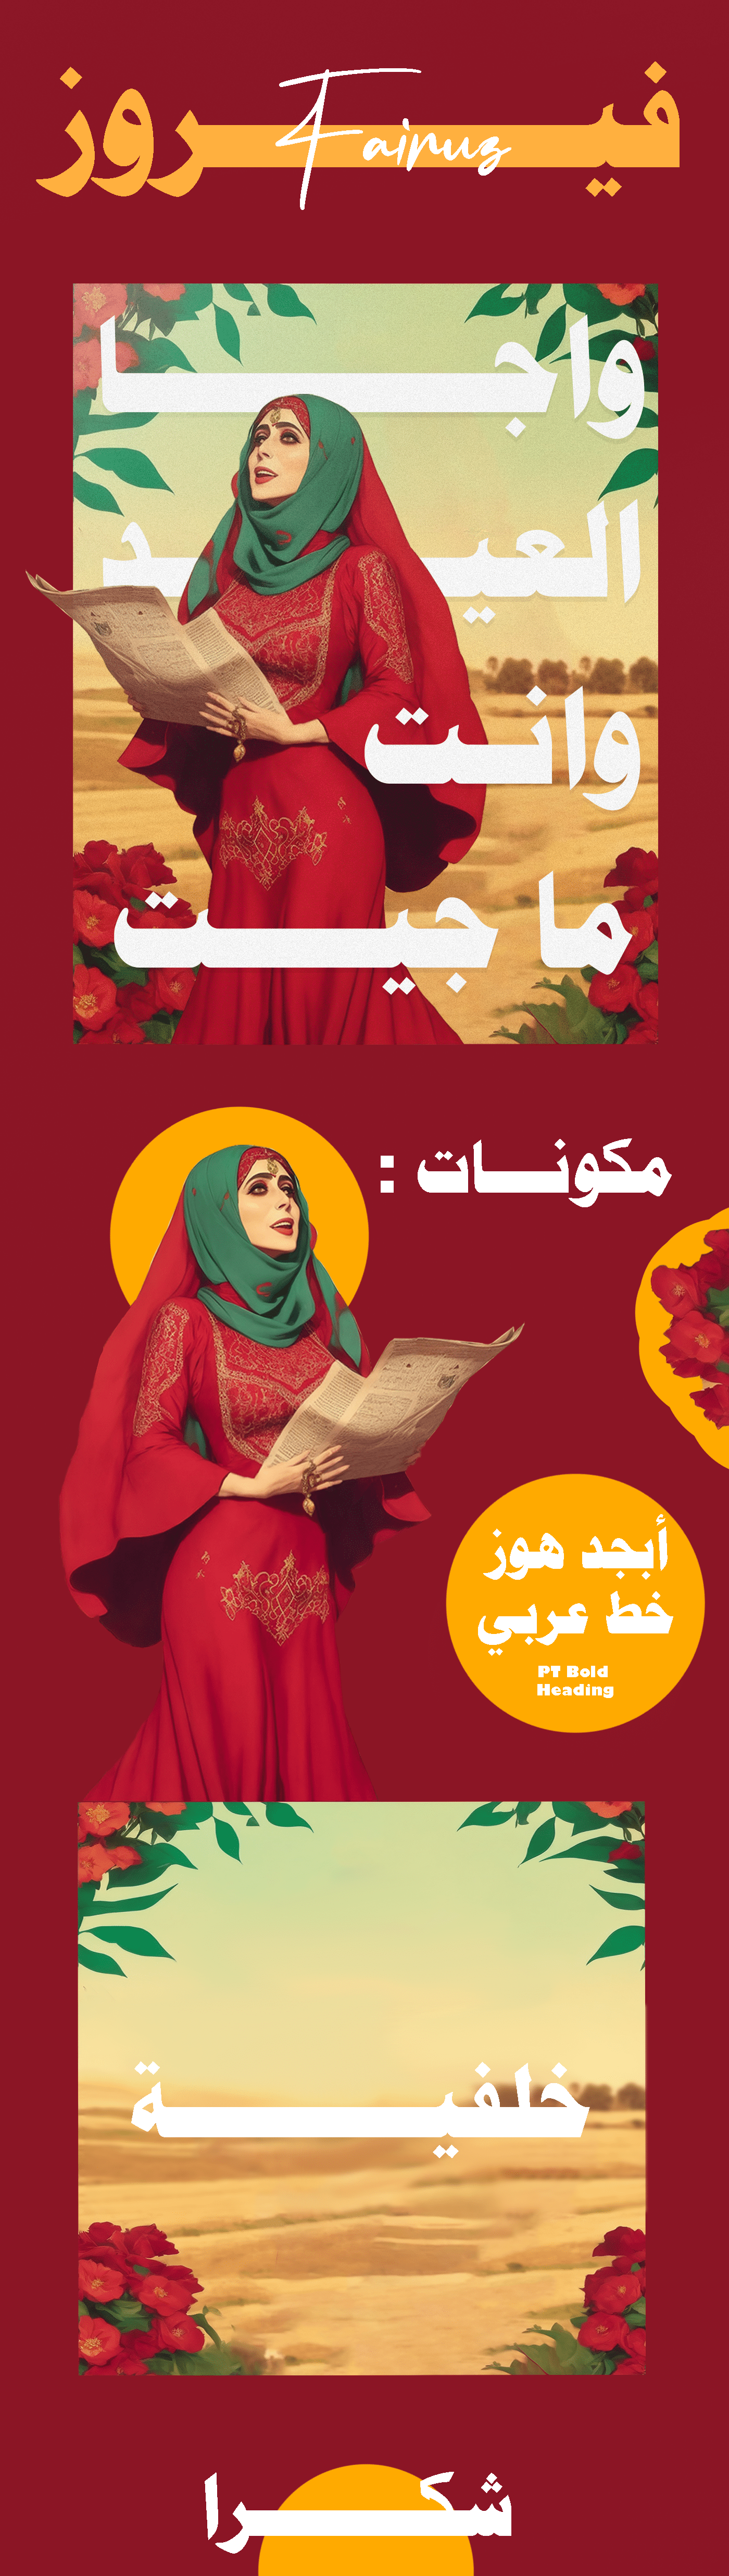 Fairuz arabic music Eid Arabic Singer Lyrics emotional art visual storytelling Middle Eastern Art